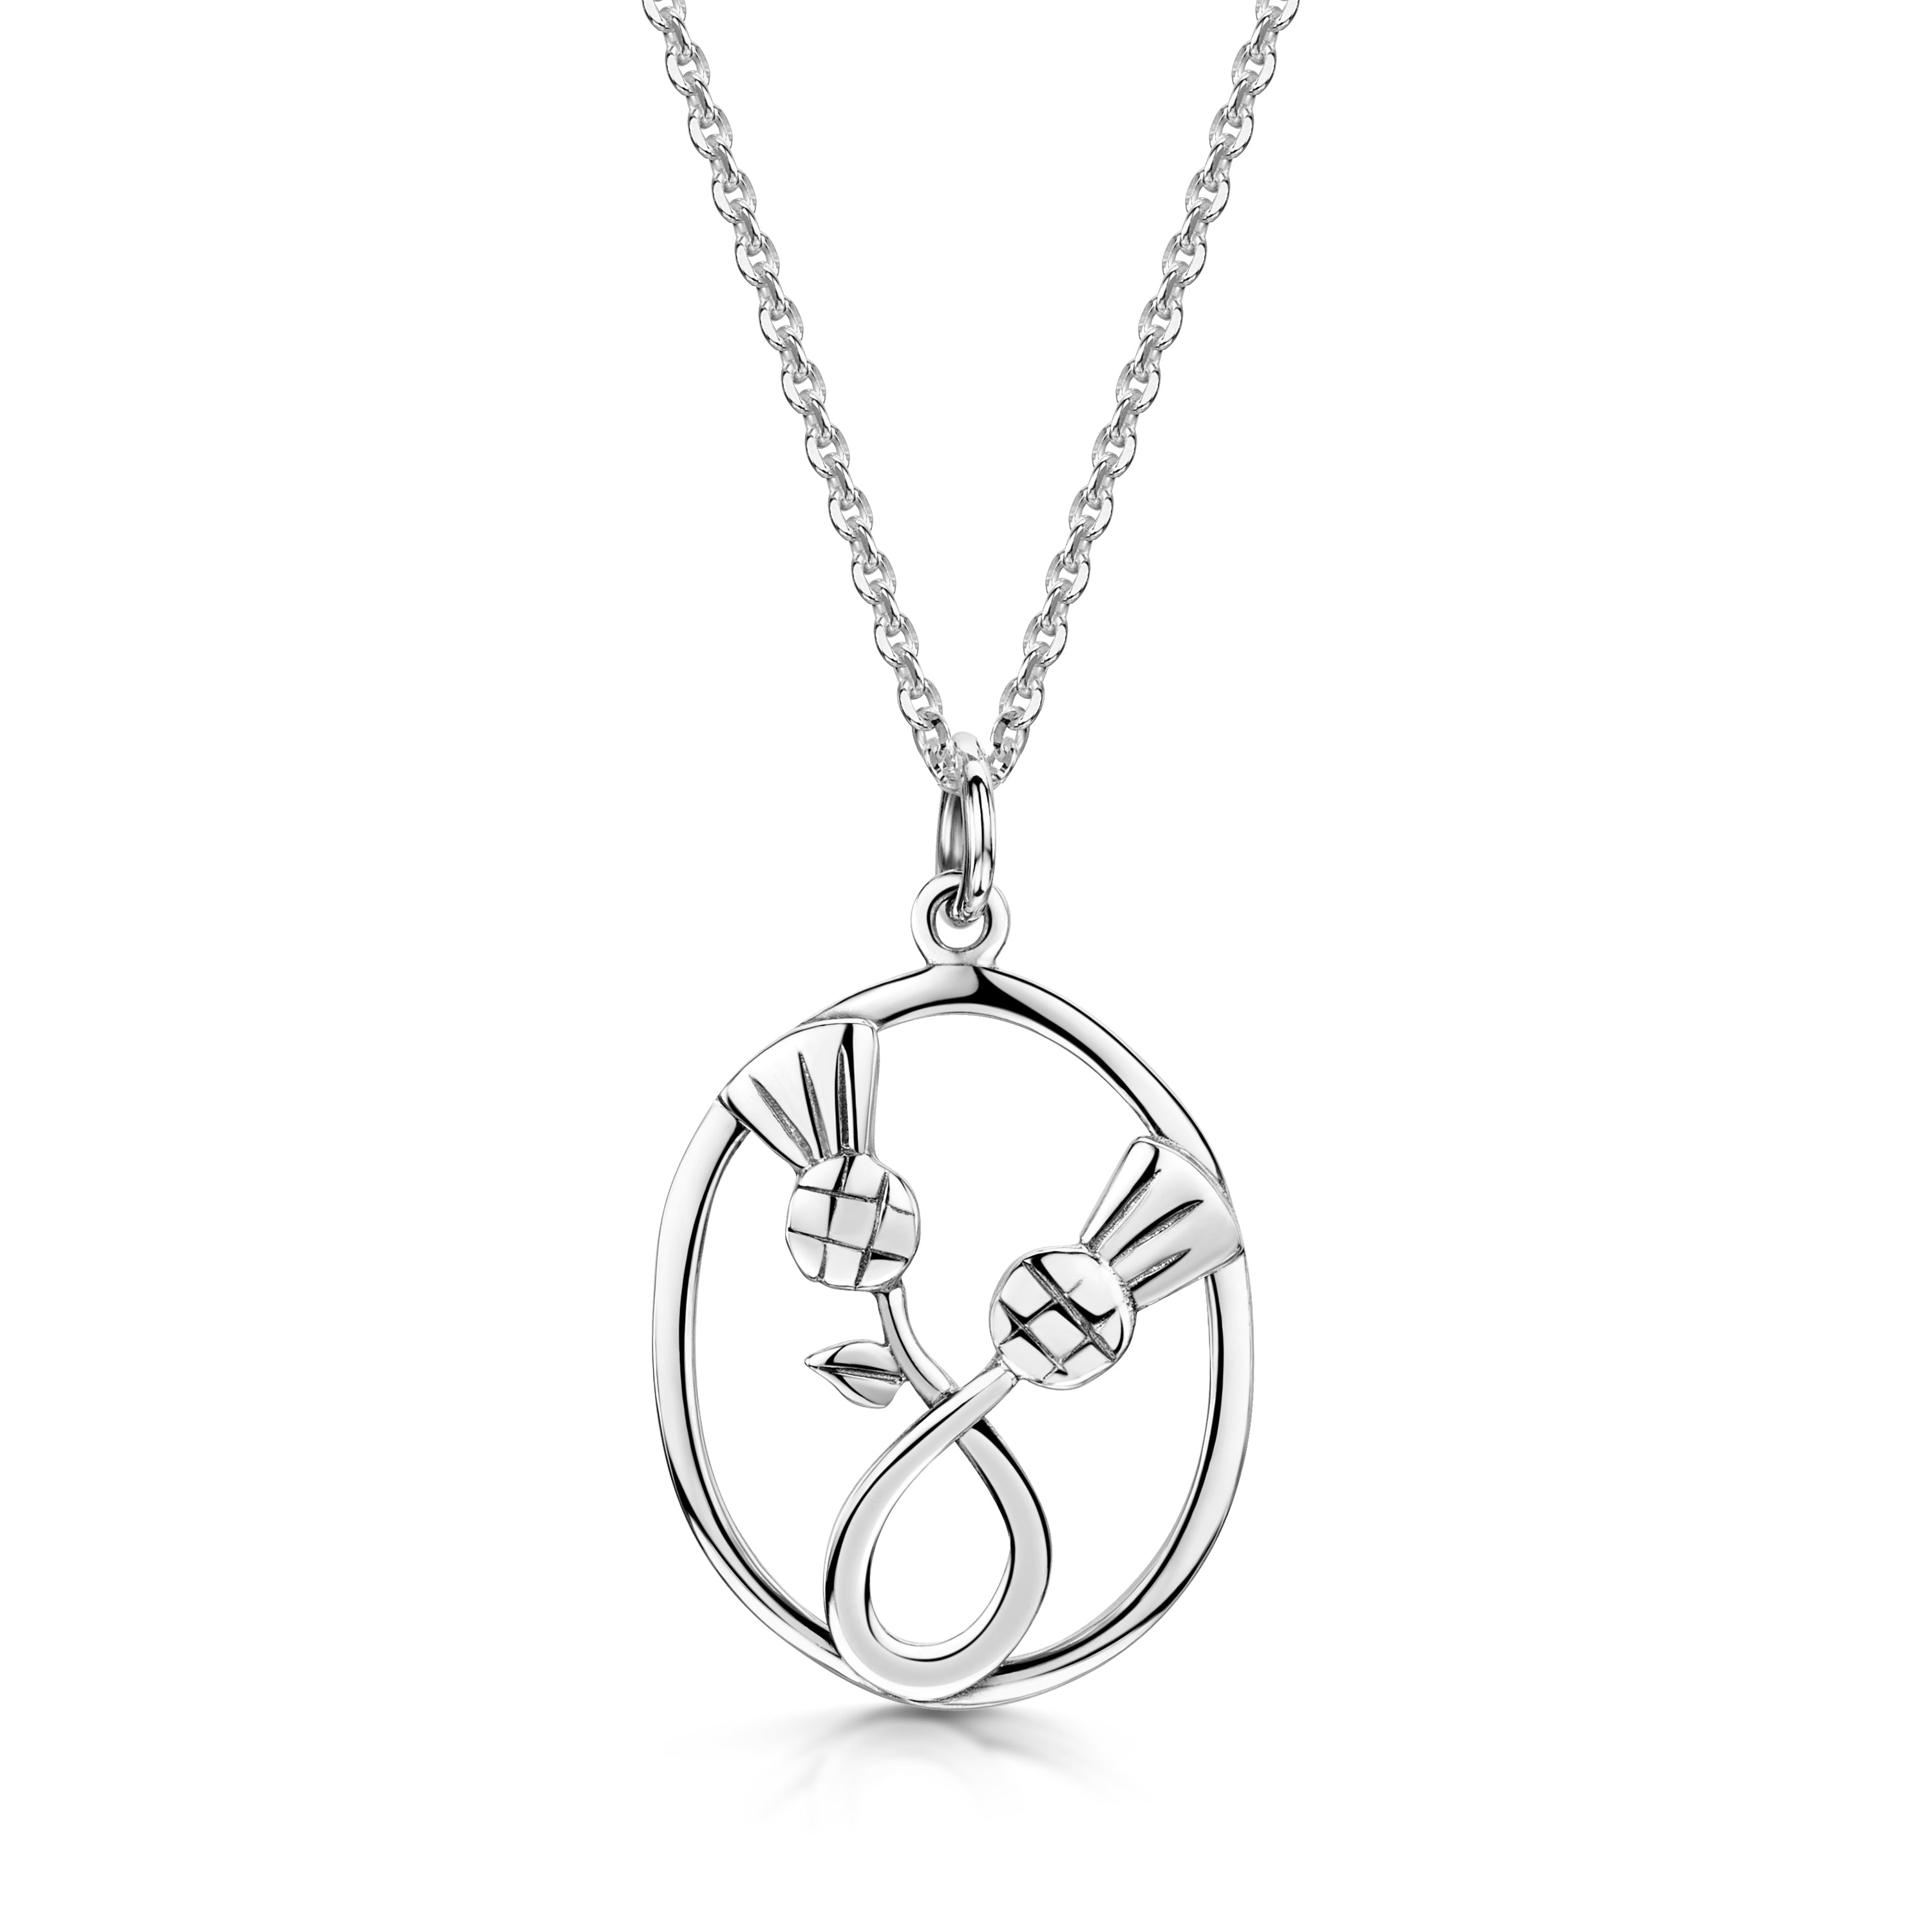 Scottish Thistle Dancing silver pendant | Glenna Jewellery Scotland